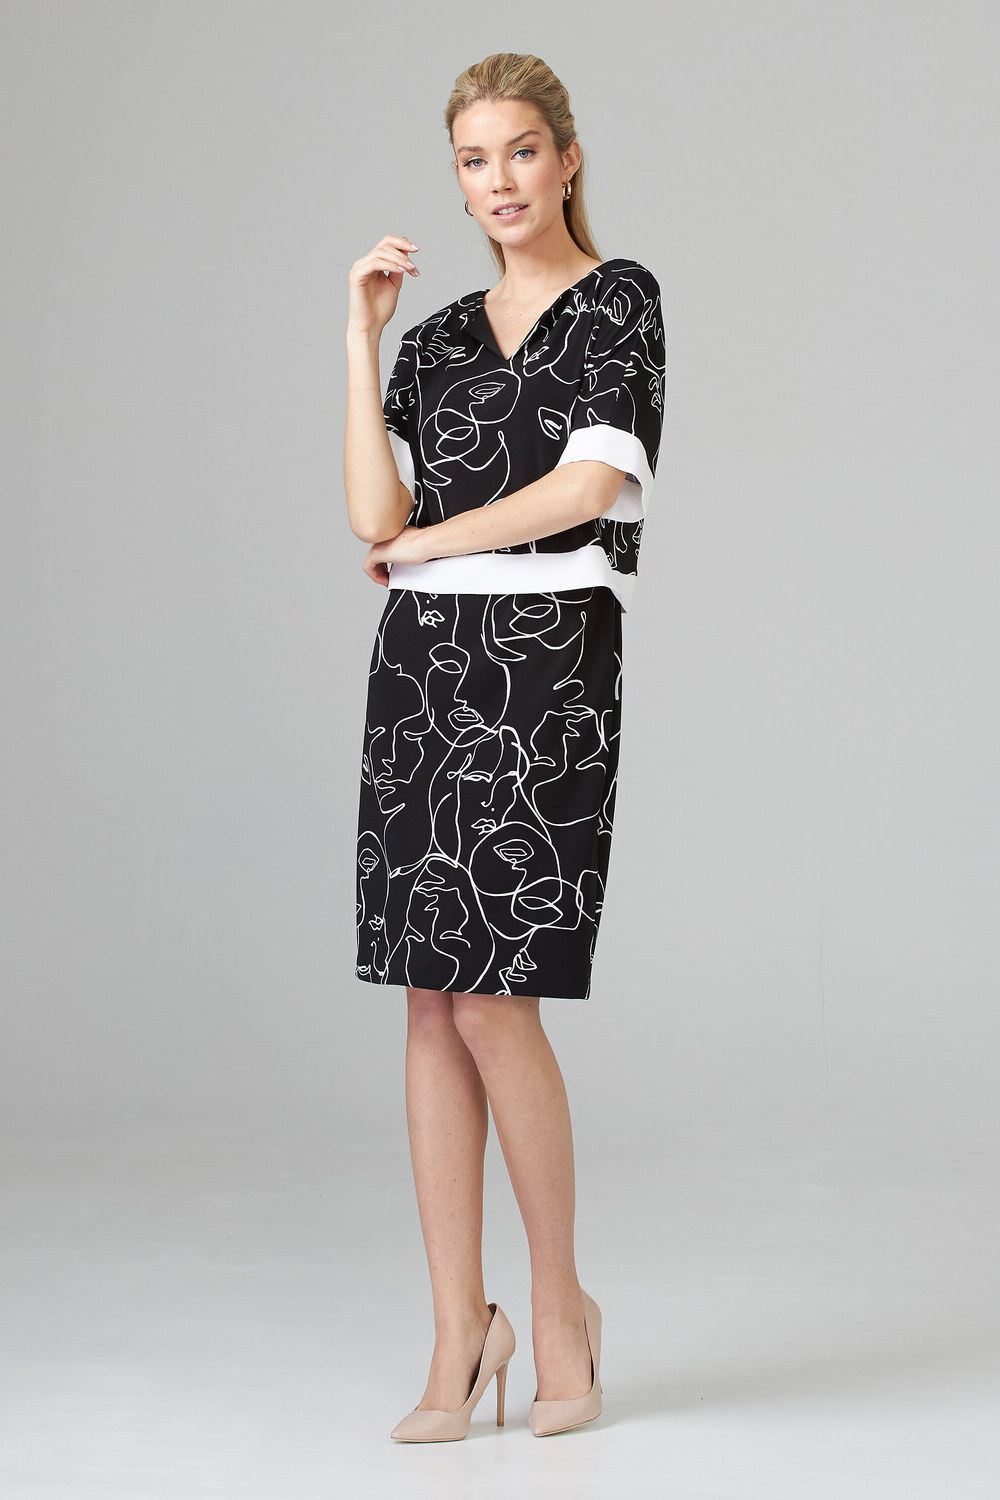 Joseph Ribkoff Dress Style 201119. Black/vanilla